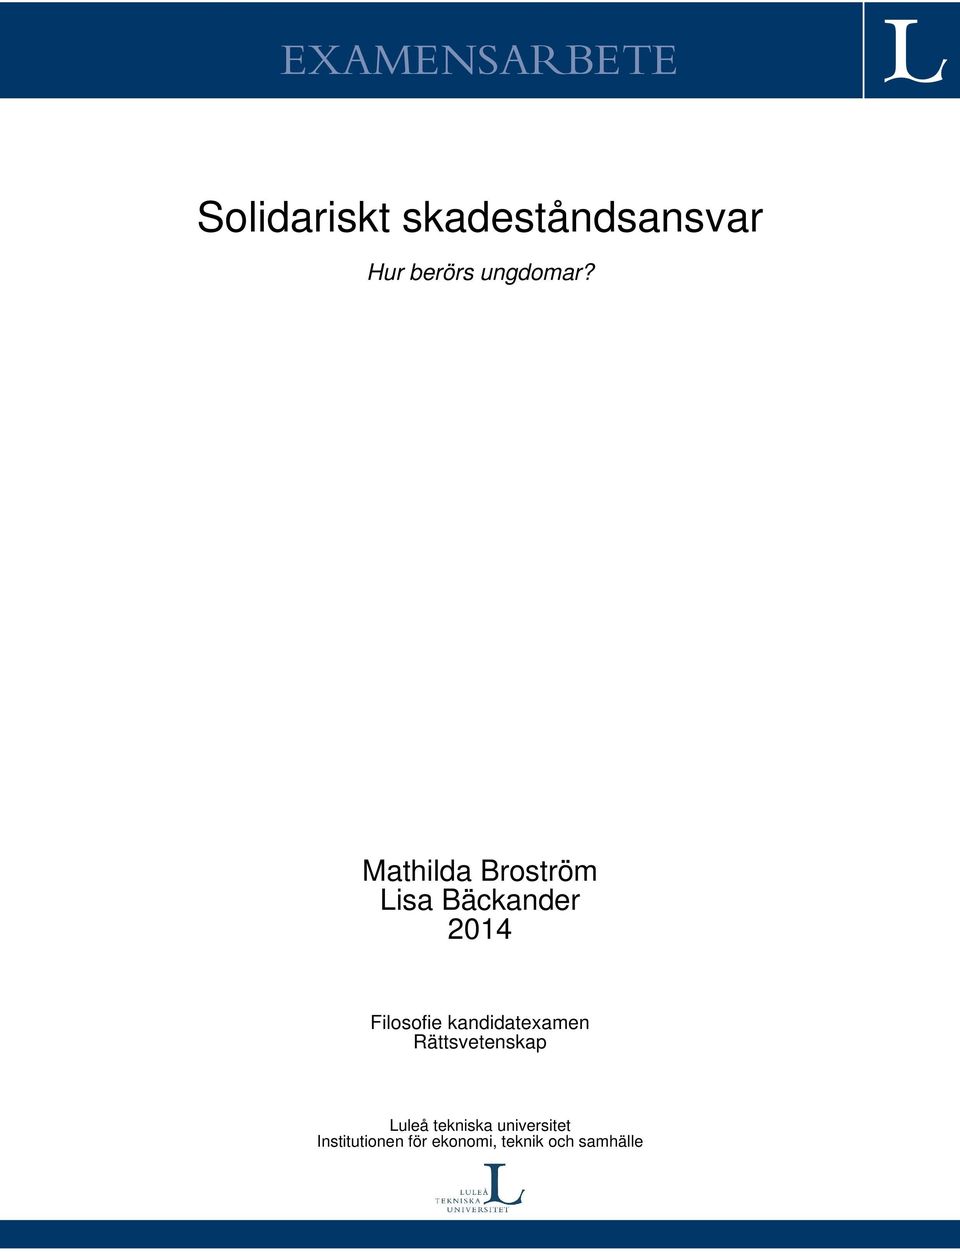 Mathilda Broström Lisa Bäckander 2014 Filosofie